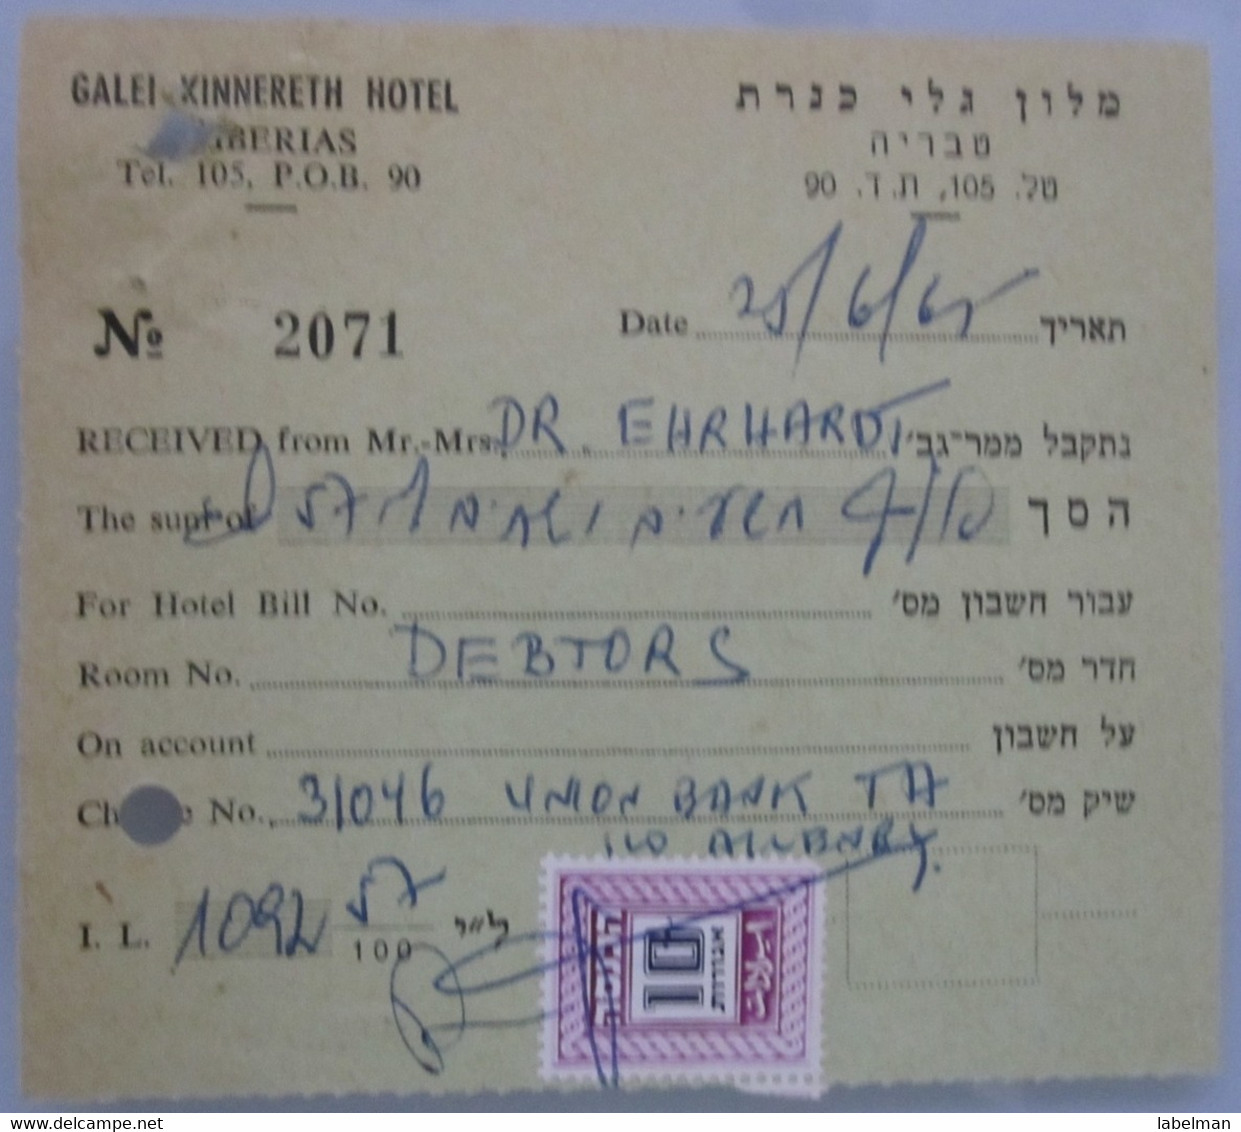 ISRAEL PALESTINE HOTEL PENSION TAX STAMP GALEI KINERETH TIBERIAS ORIGINAL VINTAGE INVOICE RECEIPT BILL - Hotel Labels